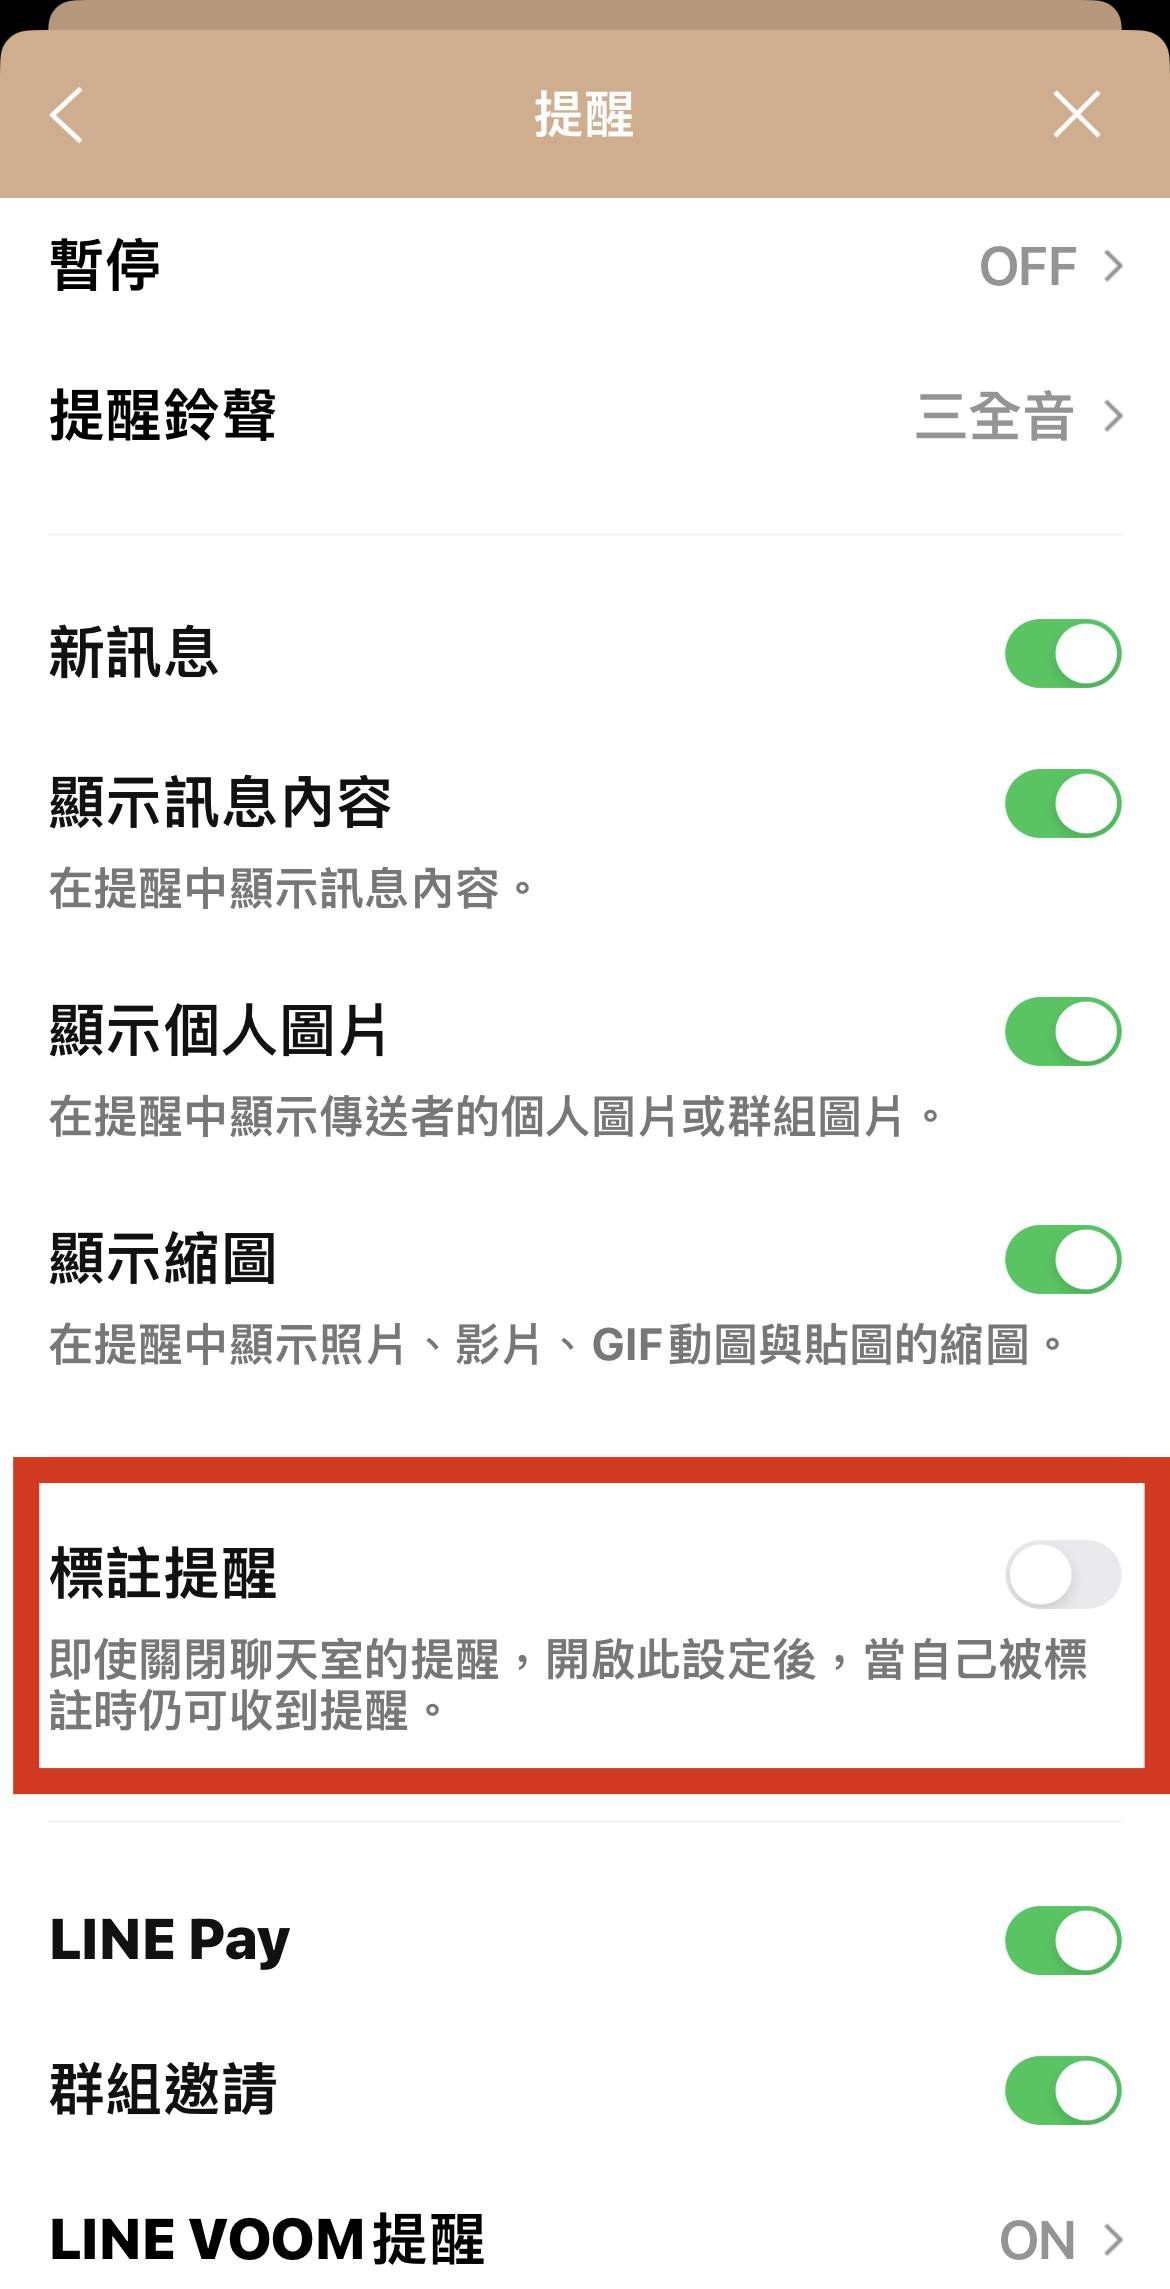 Line是台灣人最普遍使用的主要通訊軟體，在社交聯絡方面相當實用，不論是家人、朋友間的日常聊天，還是工作事項聯繫都少不了它。LINE也時常進行功能更新，讓大家使用時更加順手便利，不過有網友在Dcard分享「@ALL」功能讓他非常困擾，直呼「整個強制你要看訊息啊」，吸引許多人的共鳴。